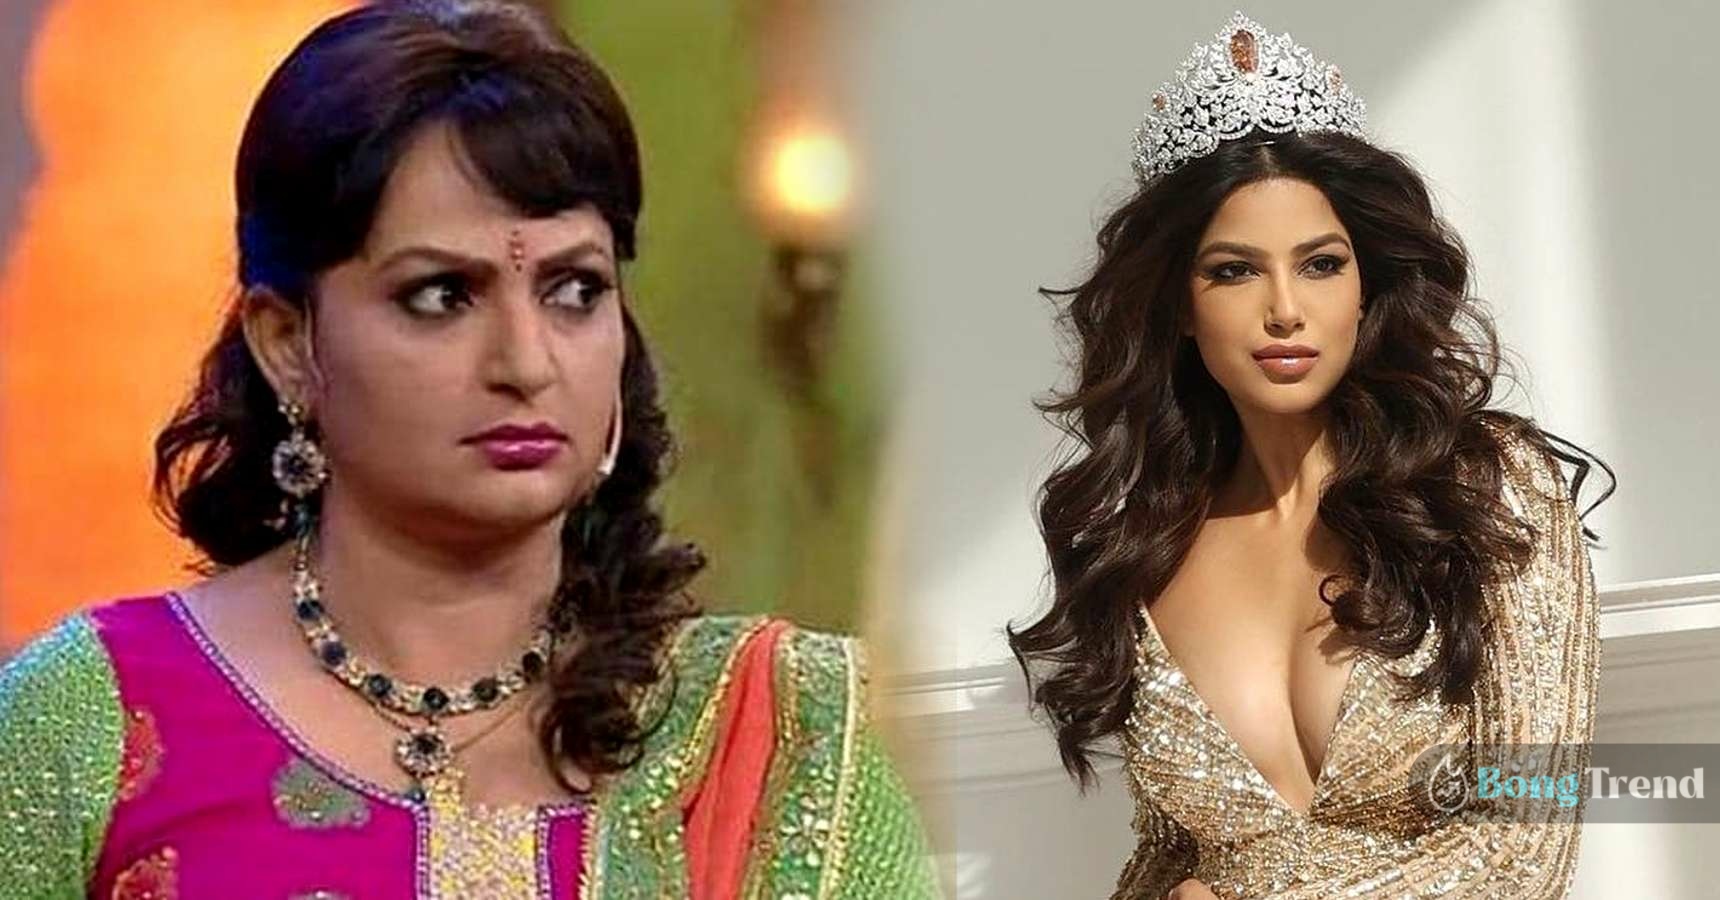 Upasana Singh has filed a civil suit against Miss Universe Harnaaz Sandhu